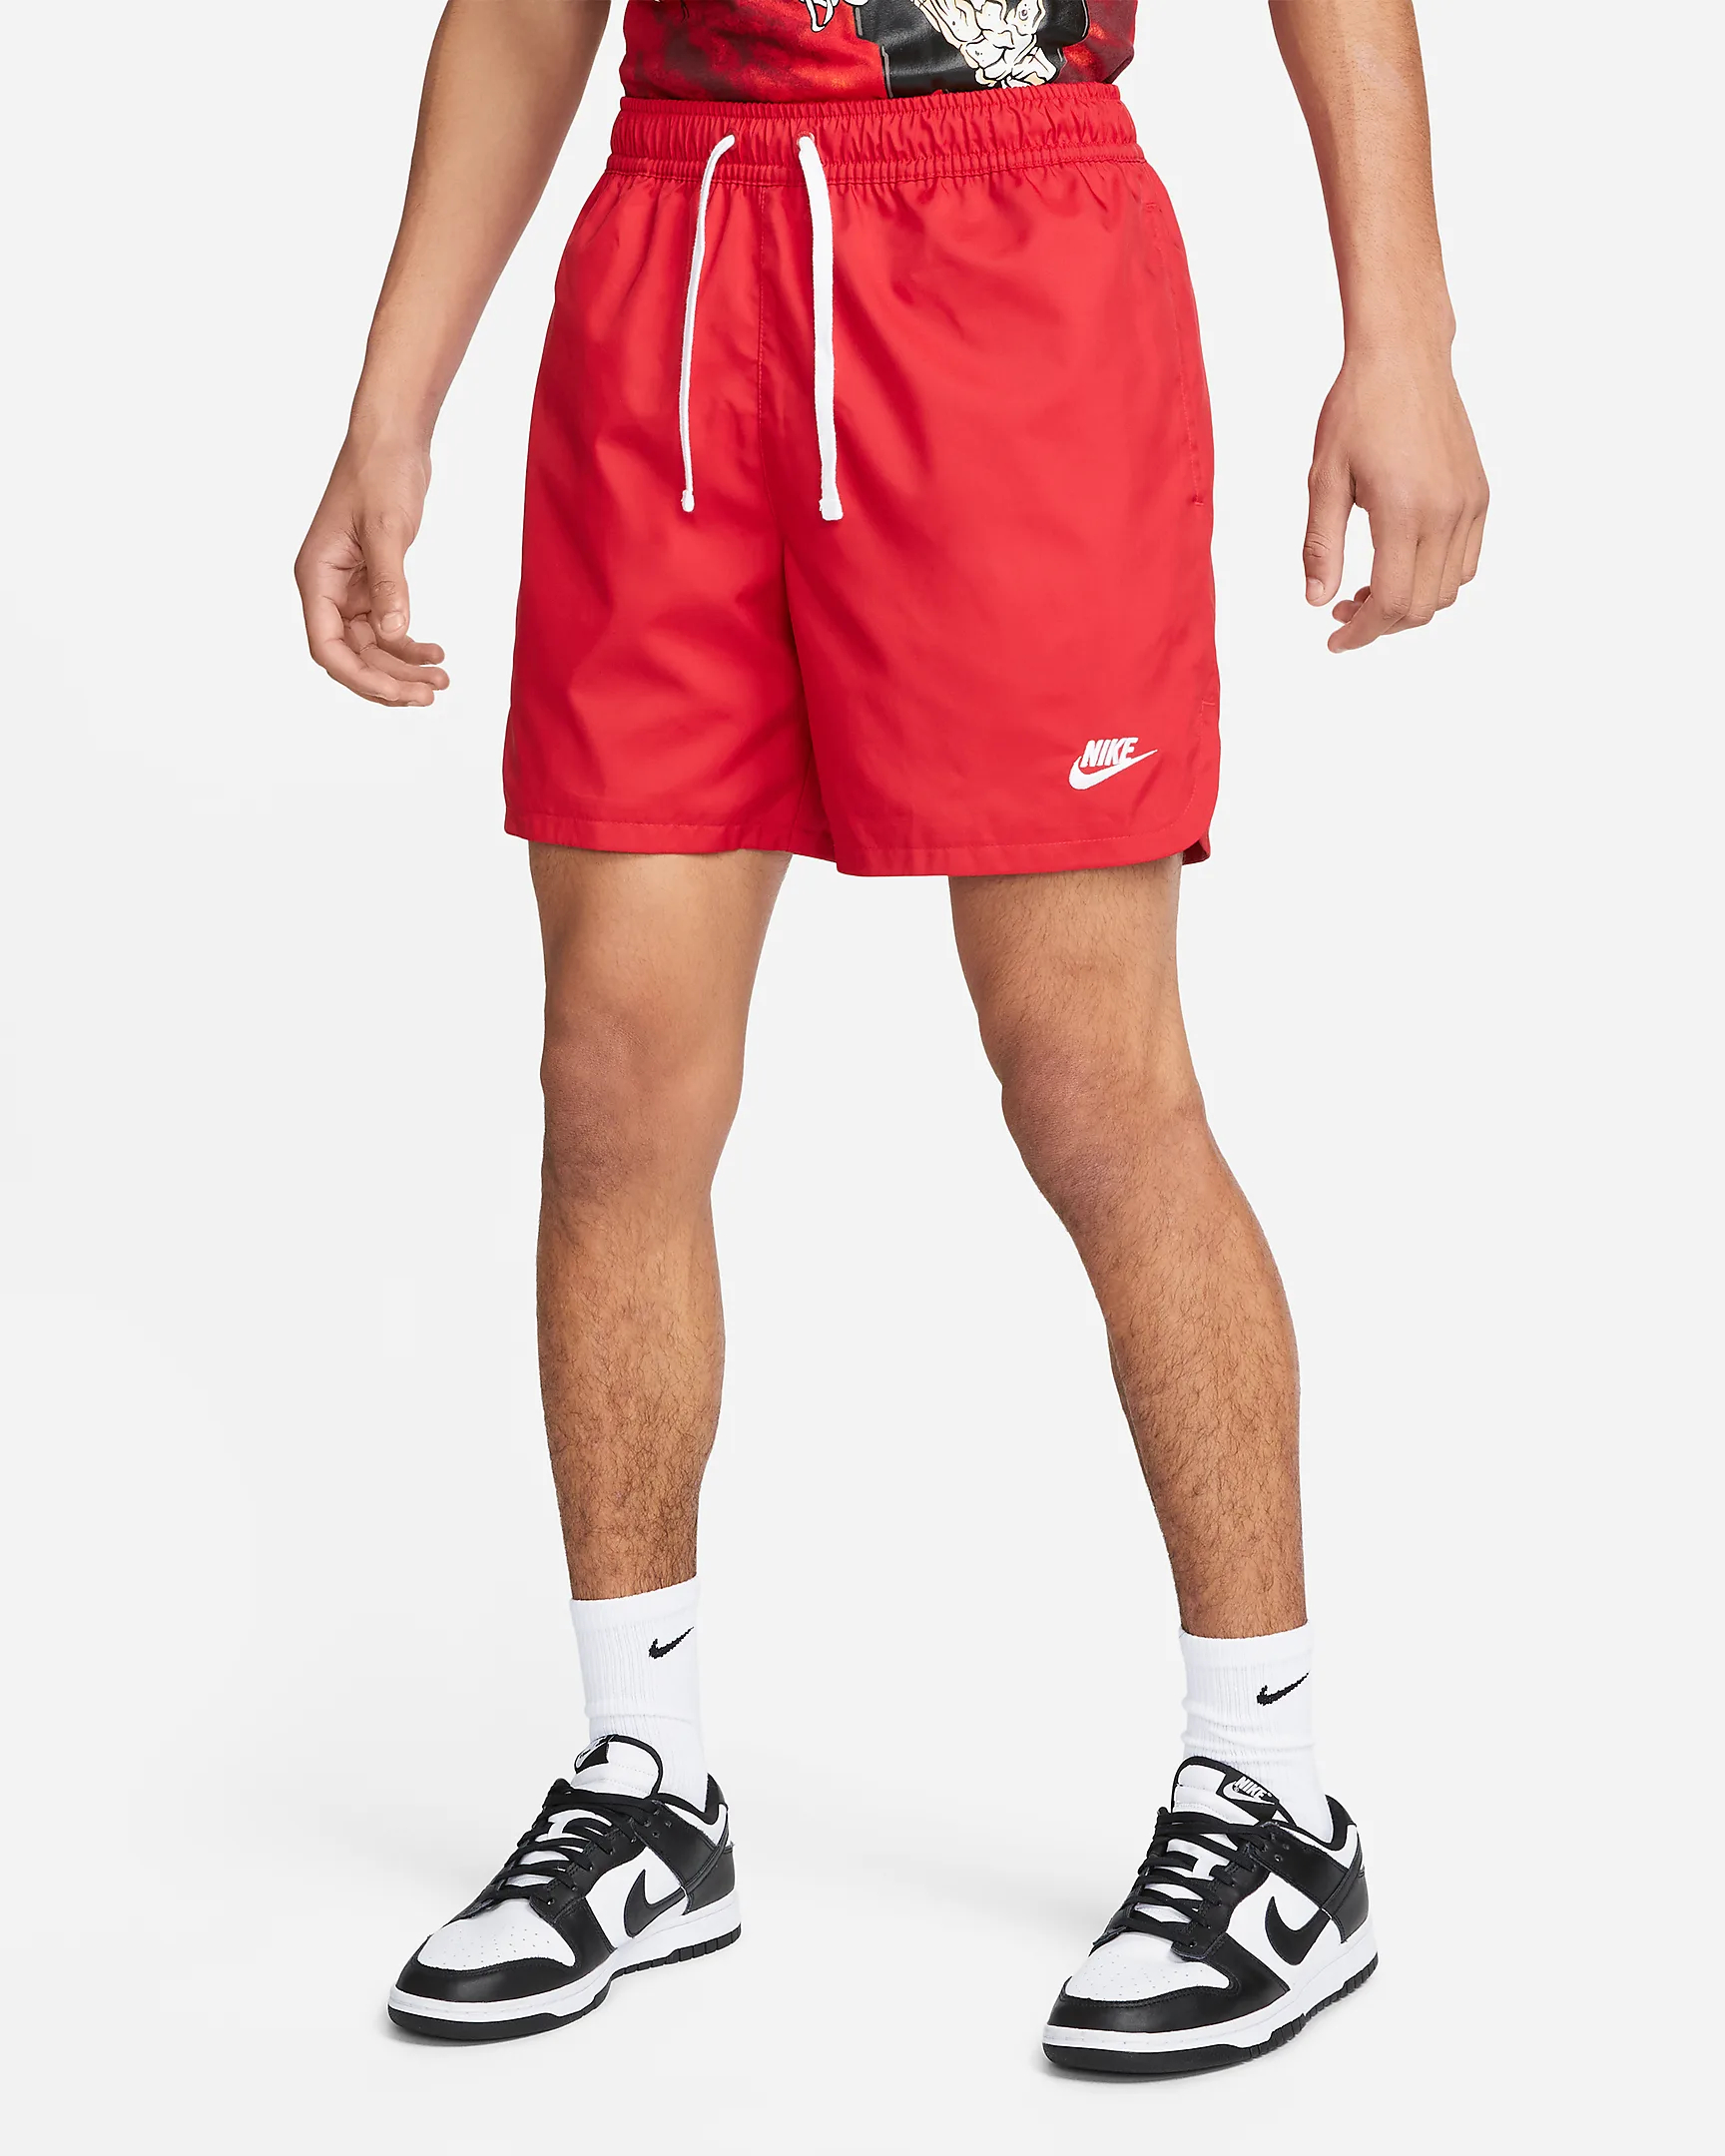 Спортивные шорты мужские Nike Spe Wvn Lnd Flow Short, DM6829-657, размер XL